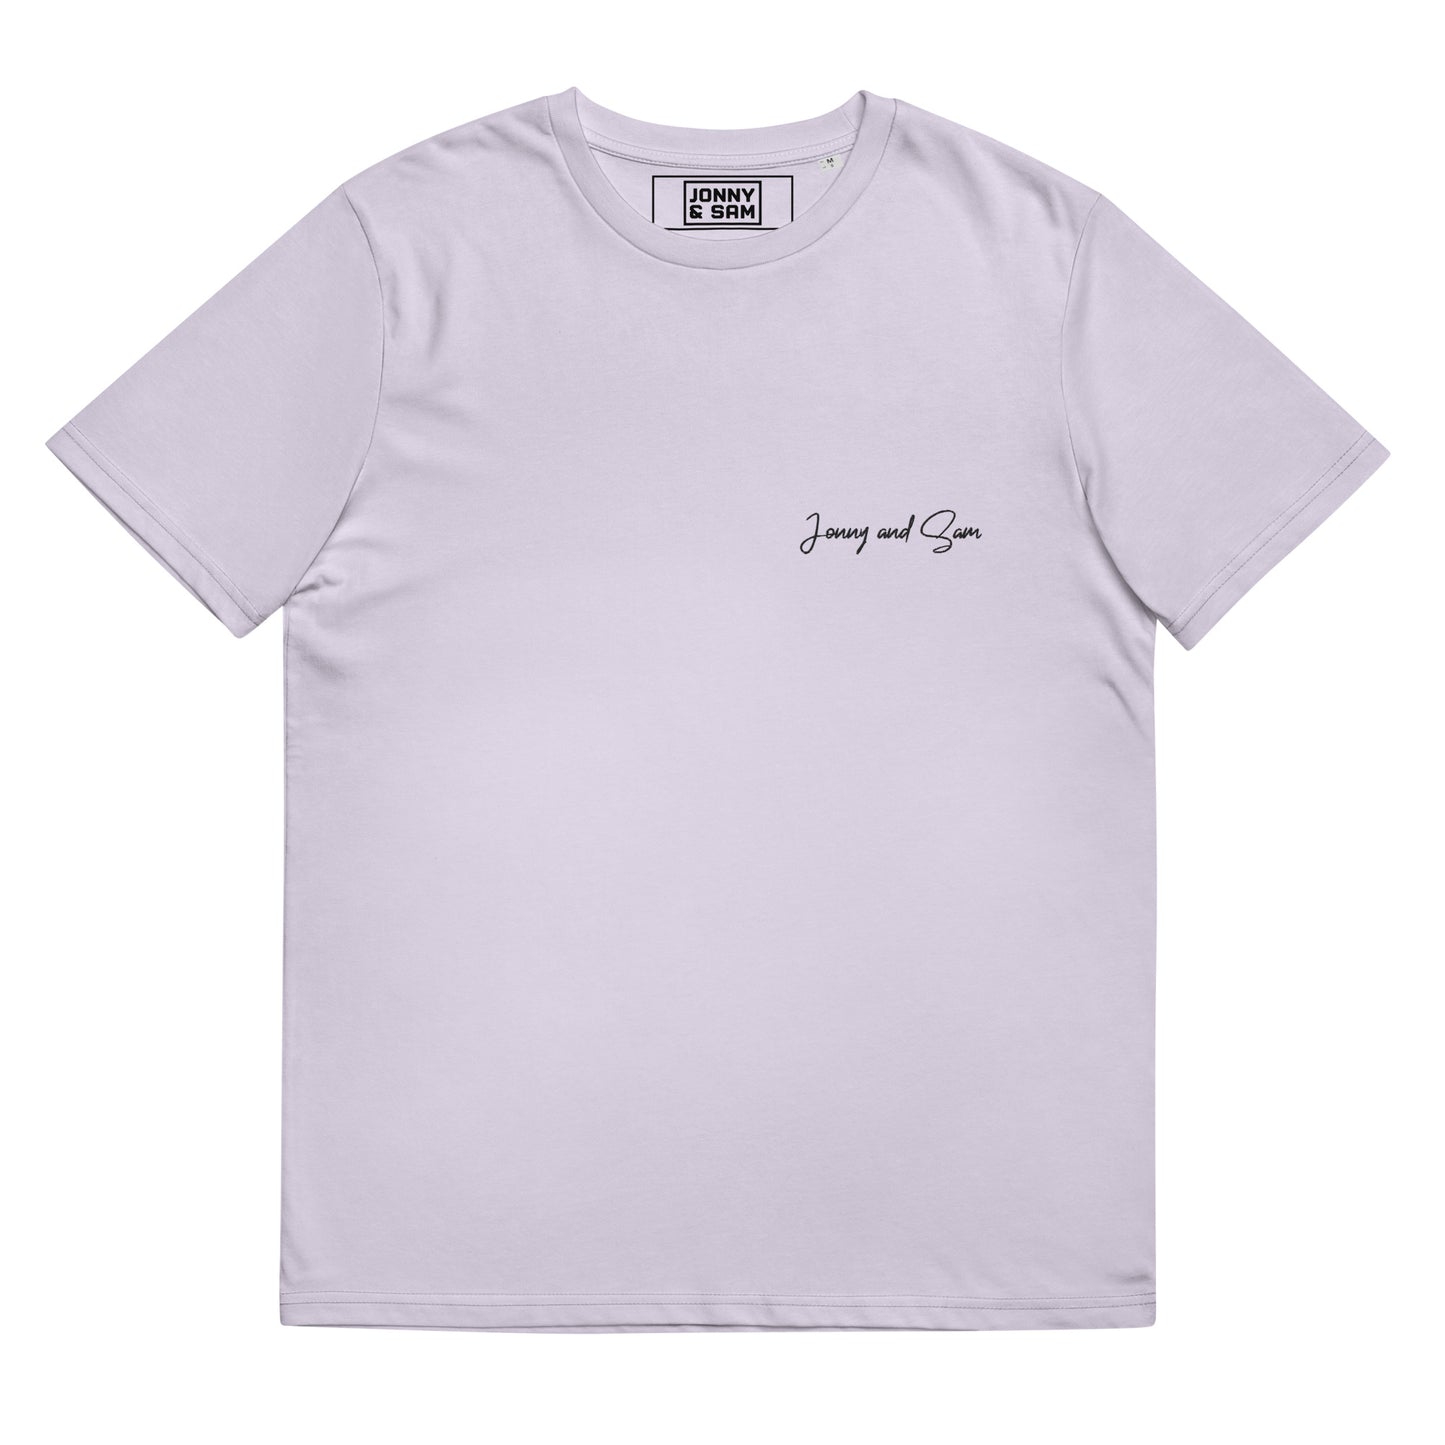 Jonny and Sam organic cotton t-shirt